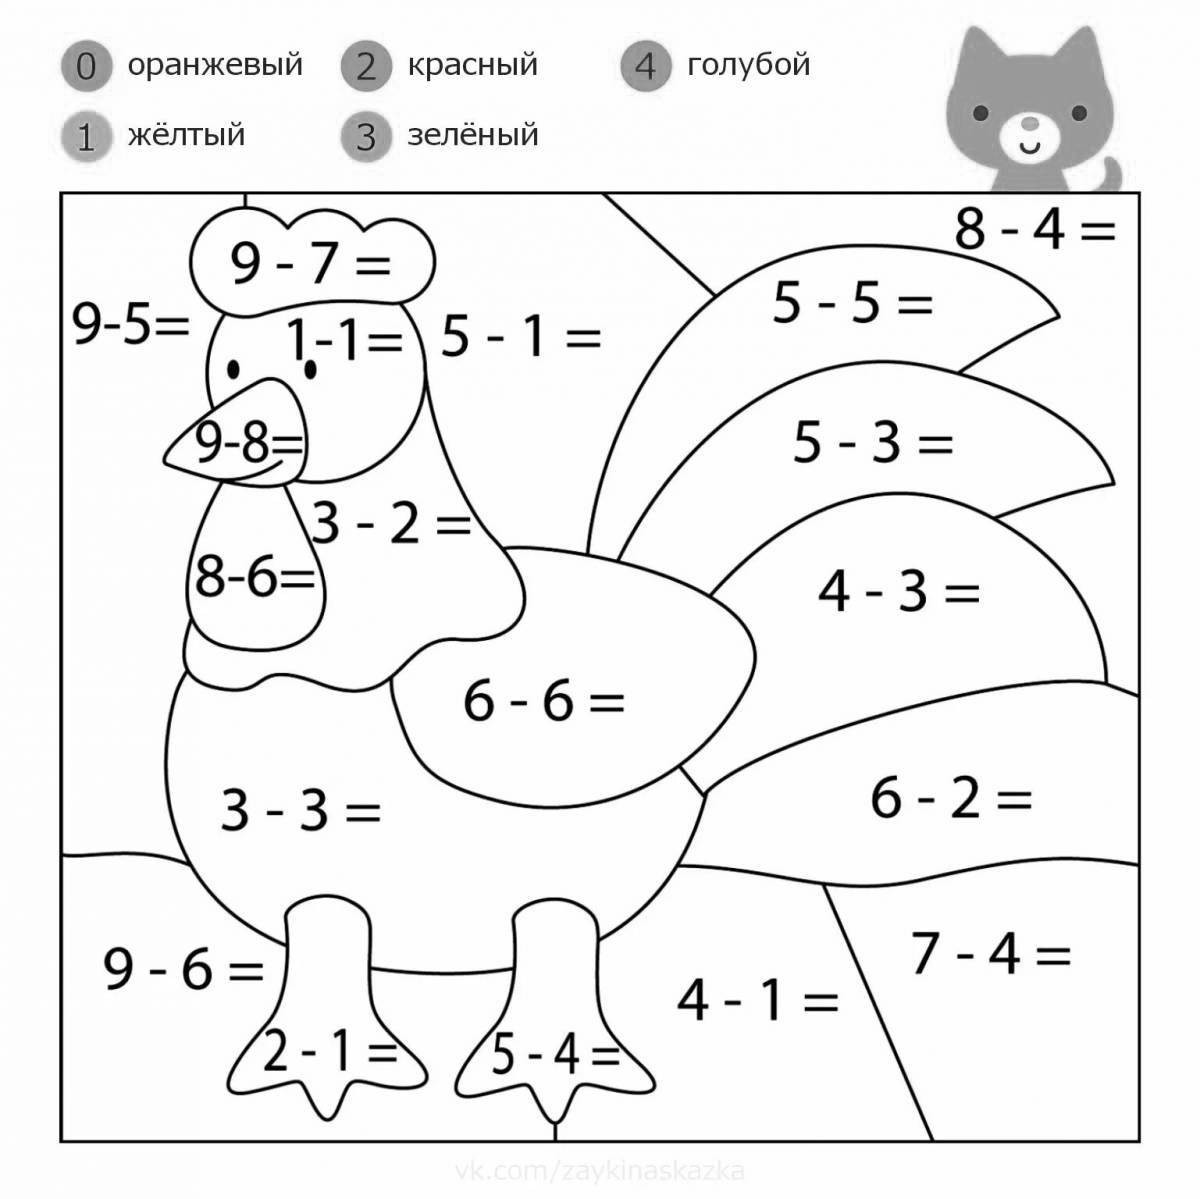 Interactive math coloring book for preschoolers